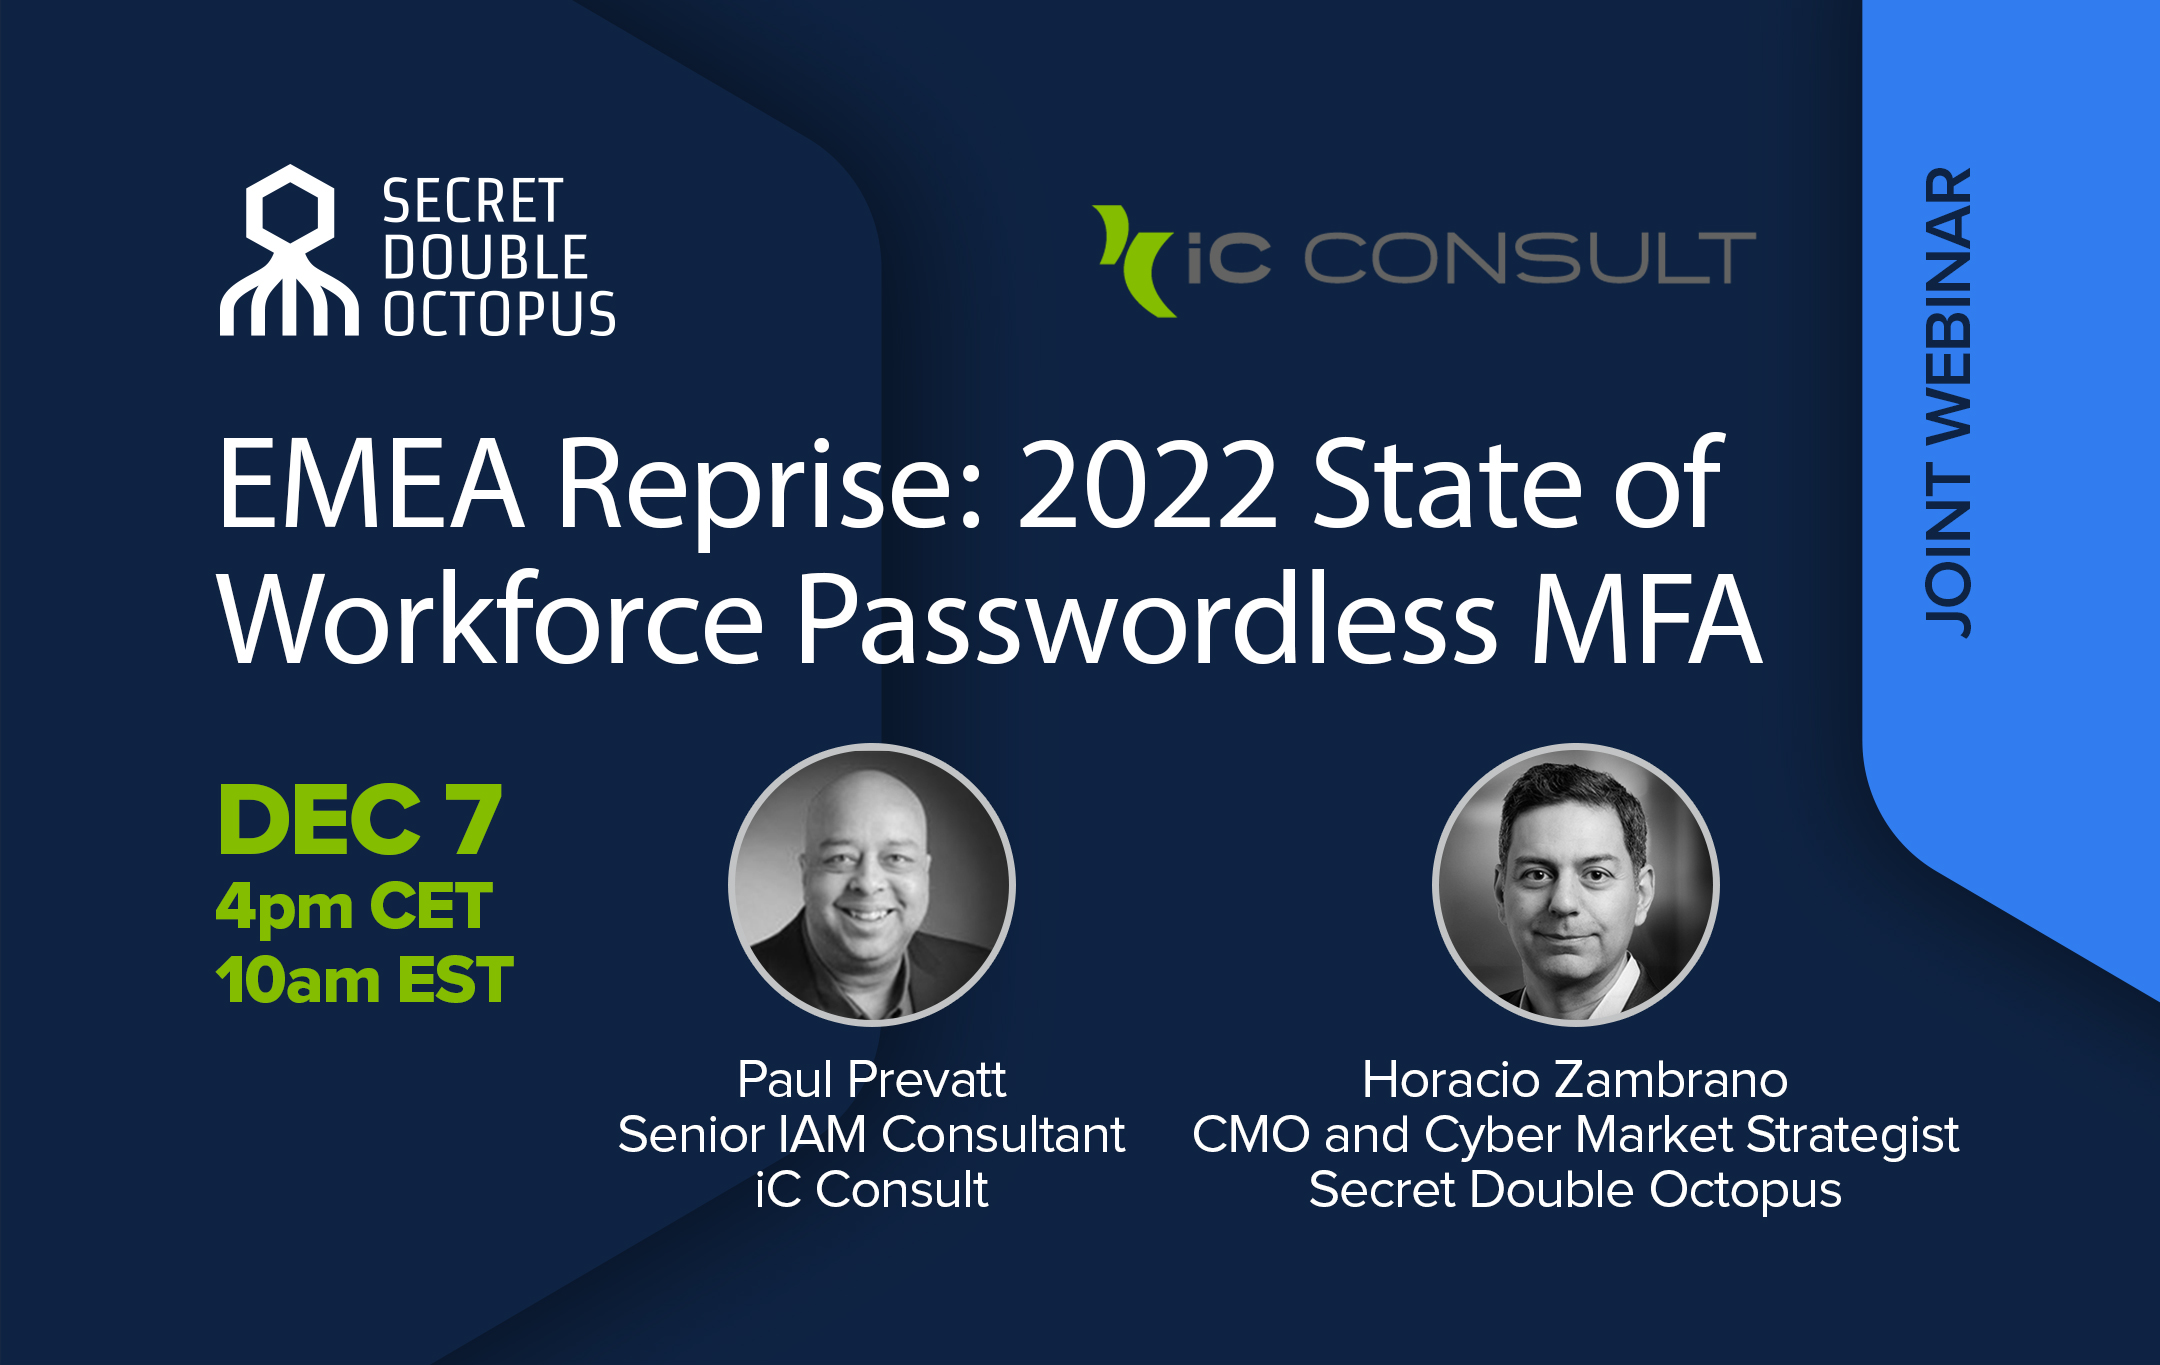 EMEA Reprise 2022 State of Workforce Passwordless MFA